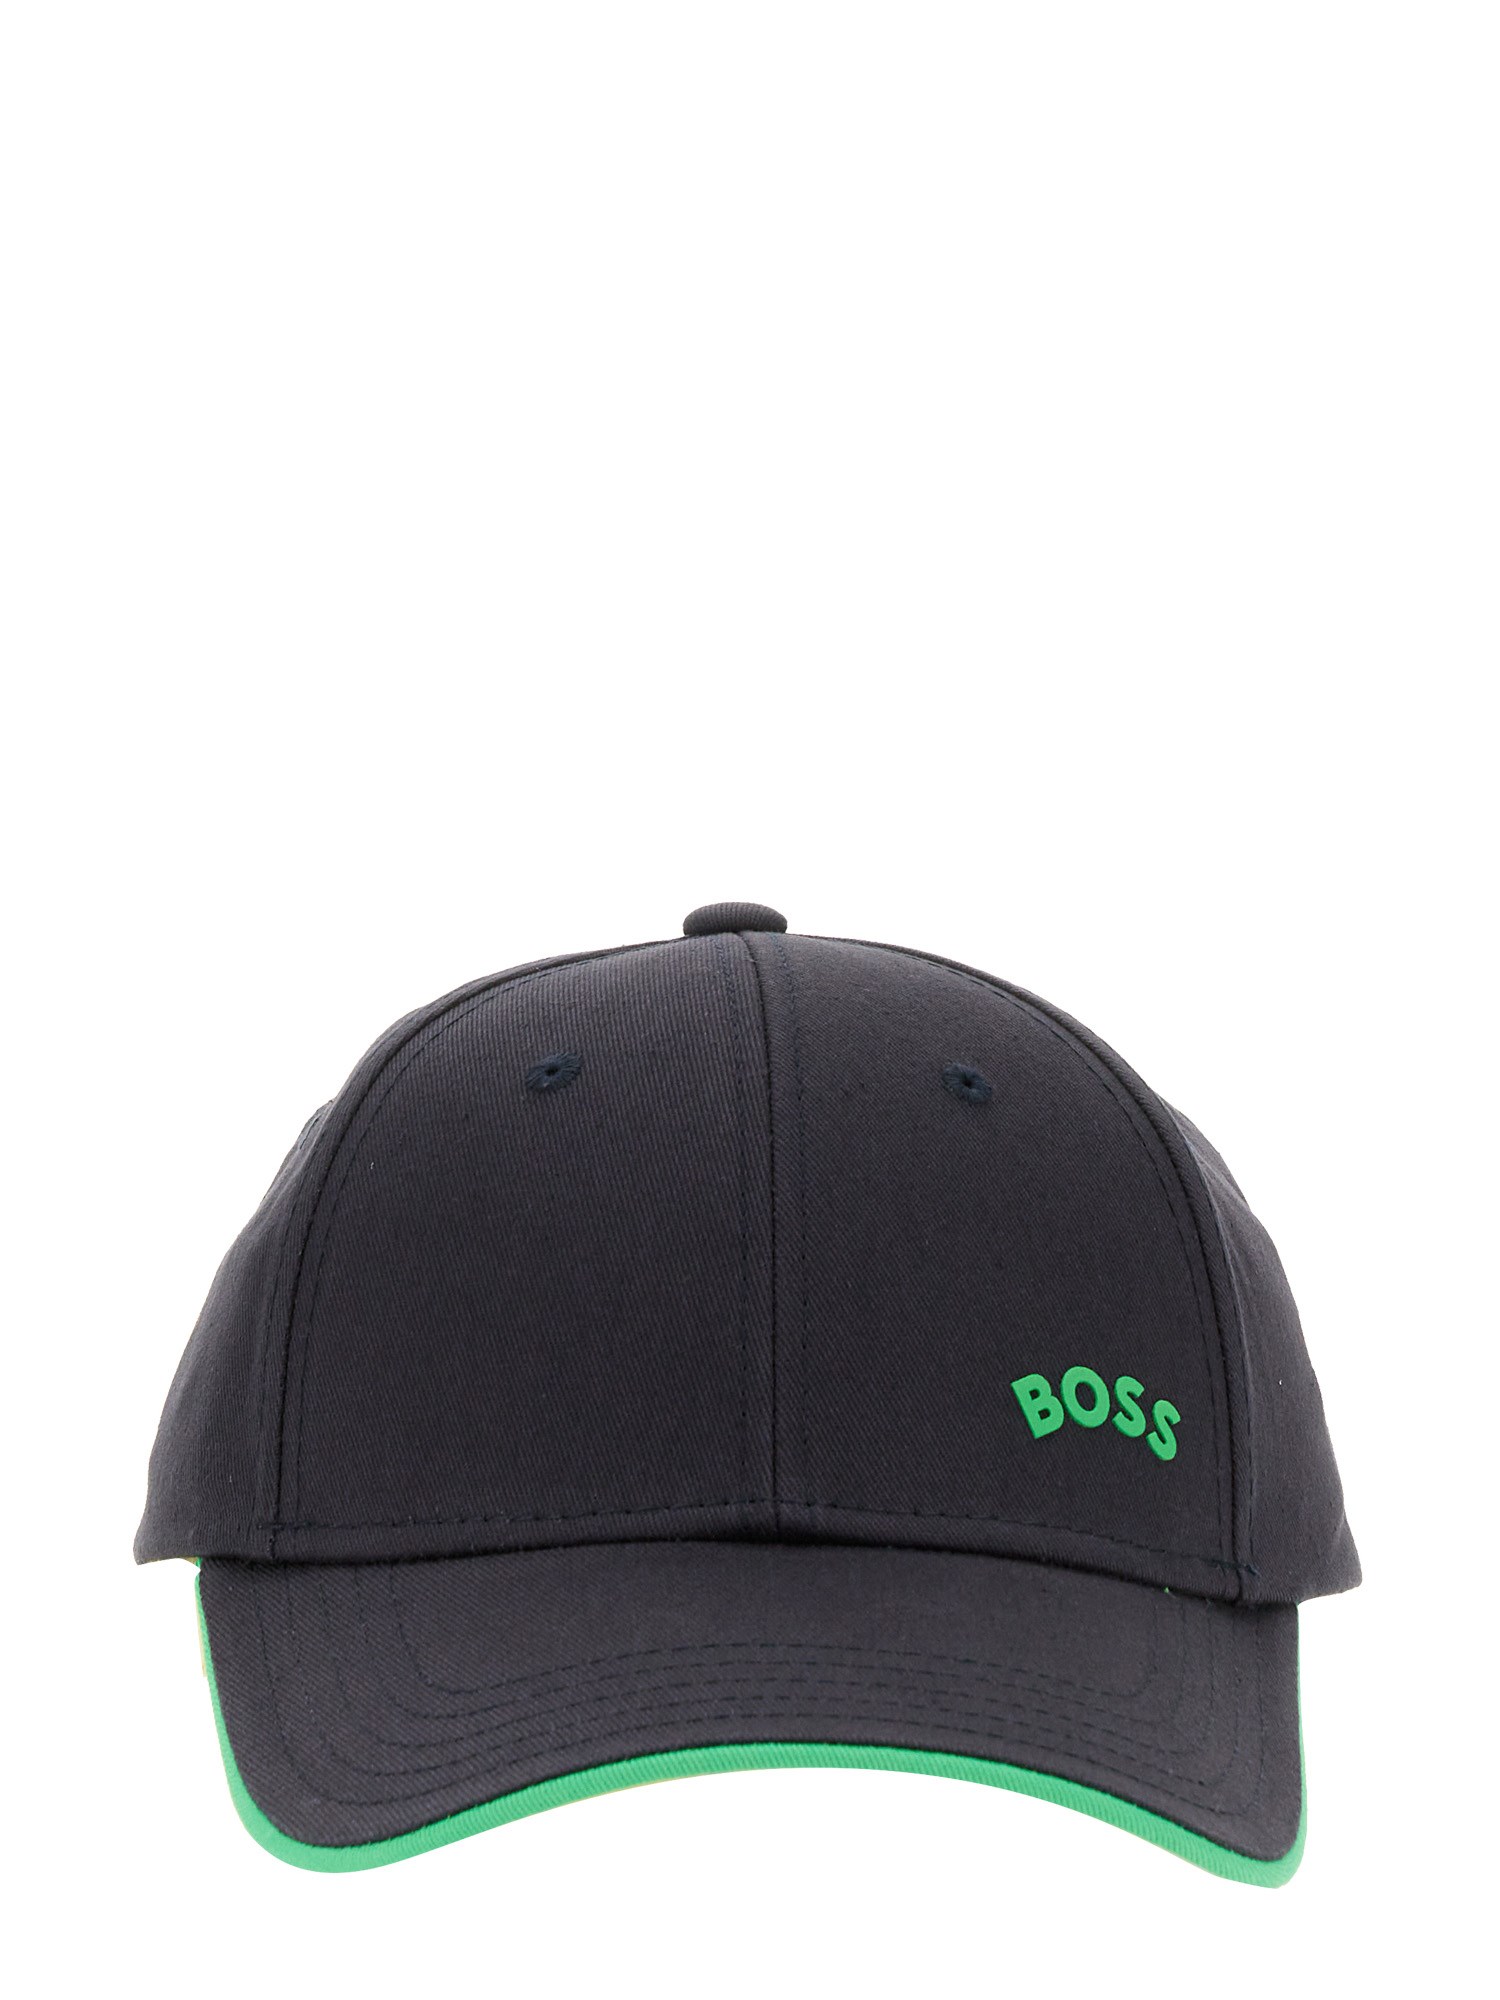 boss baseball hat with logo